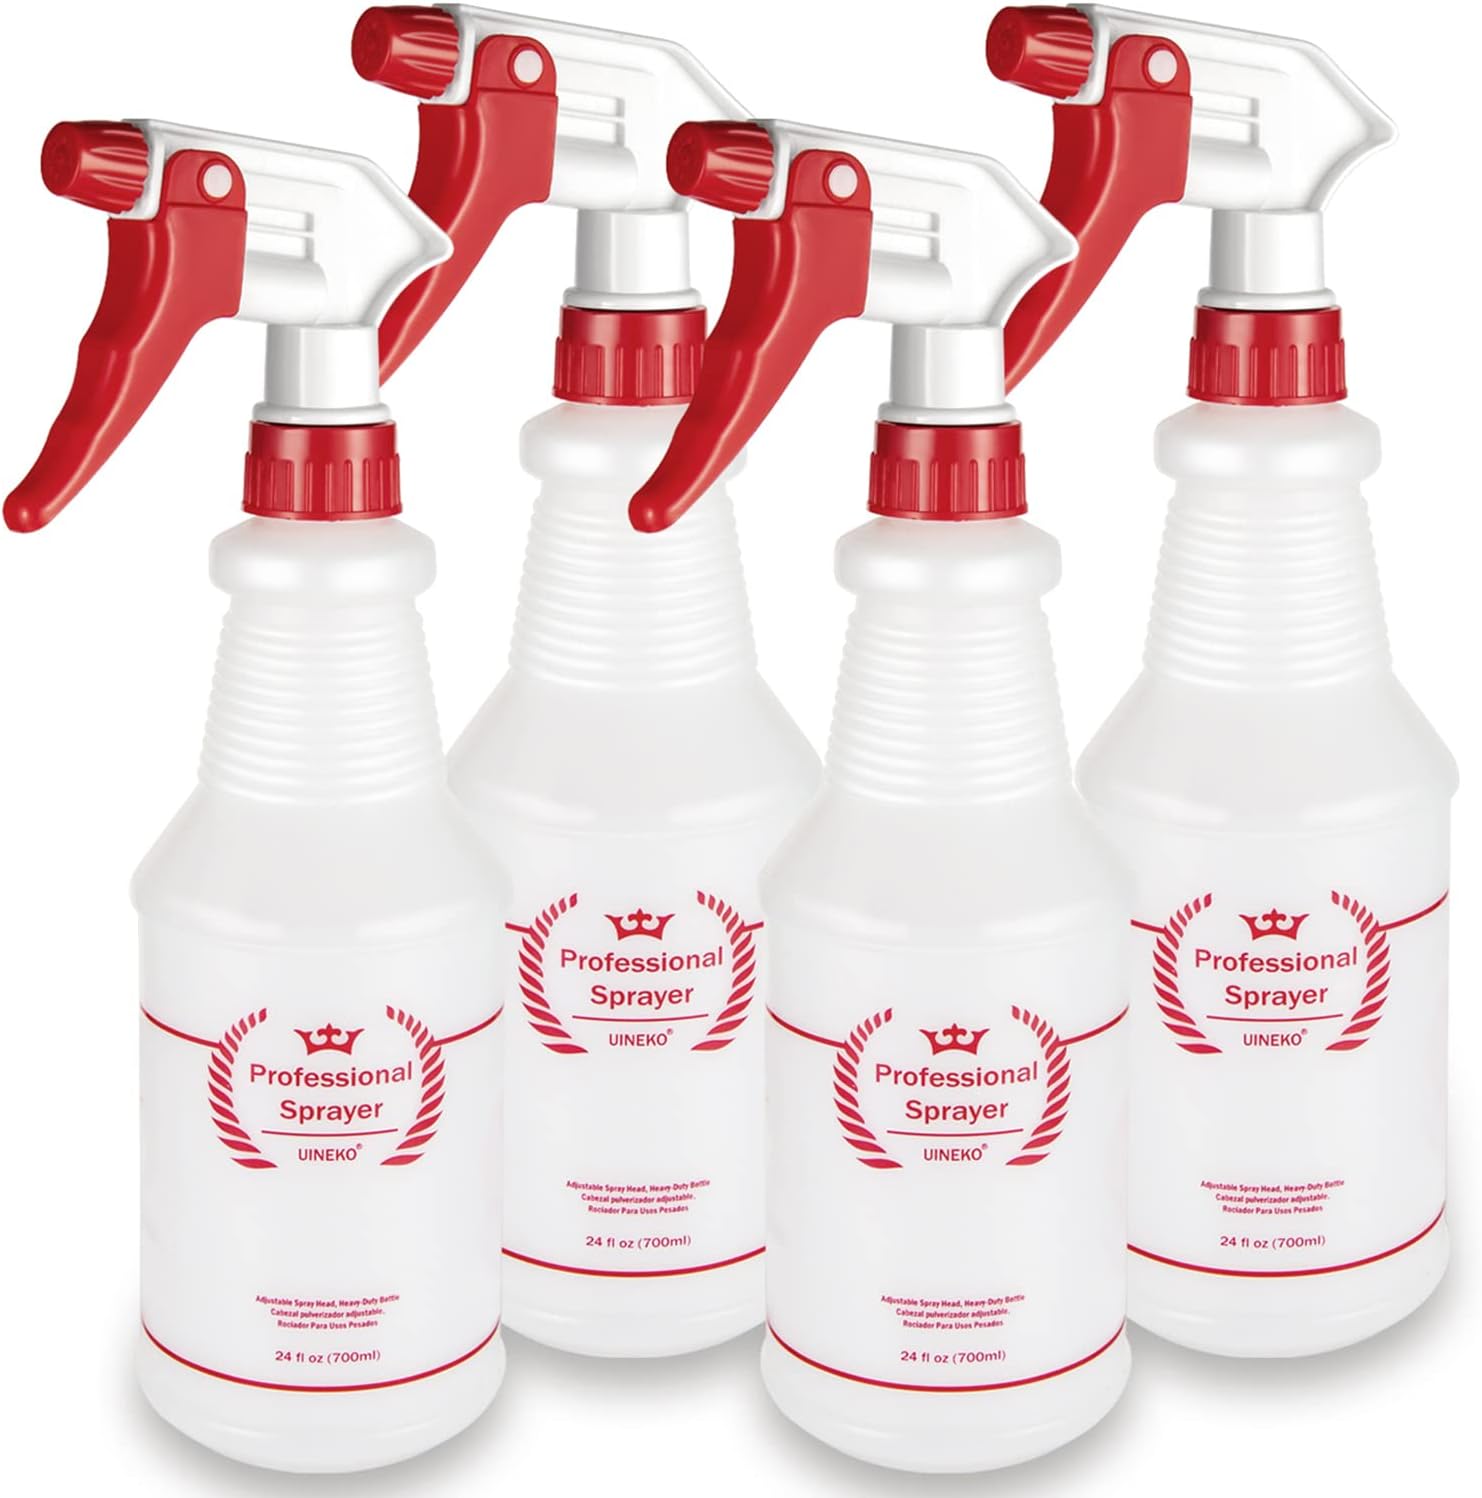 commercial spray bottle product comparison